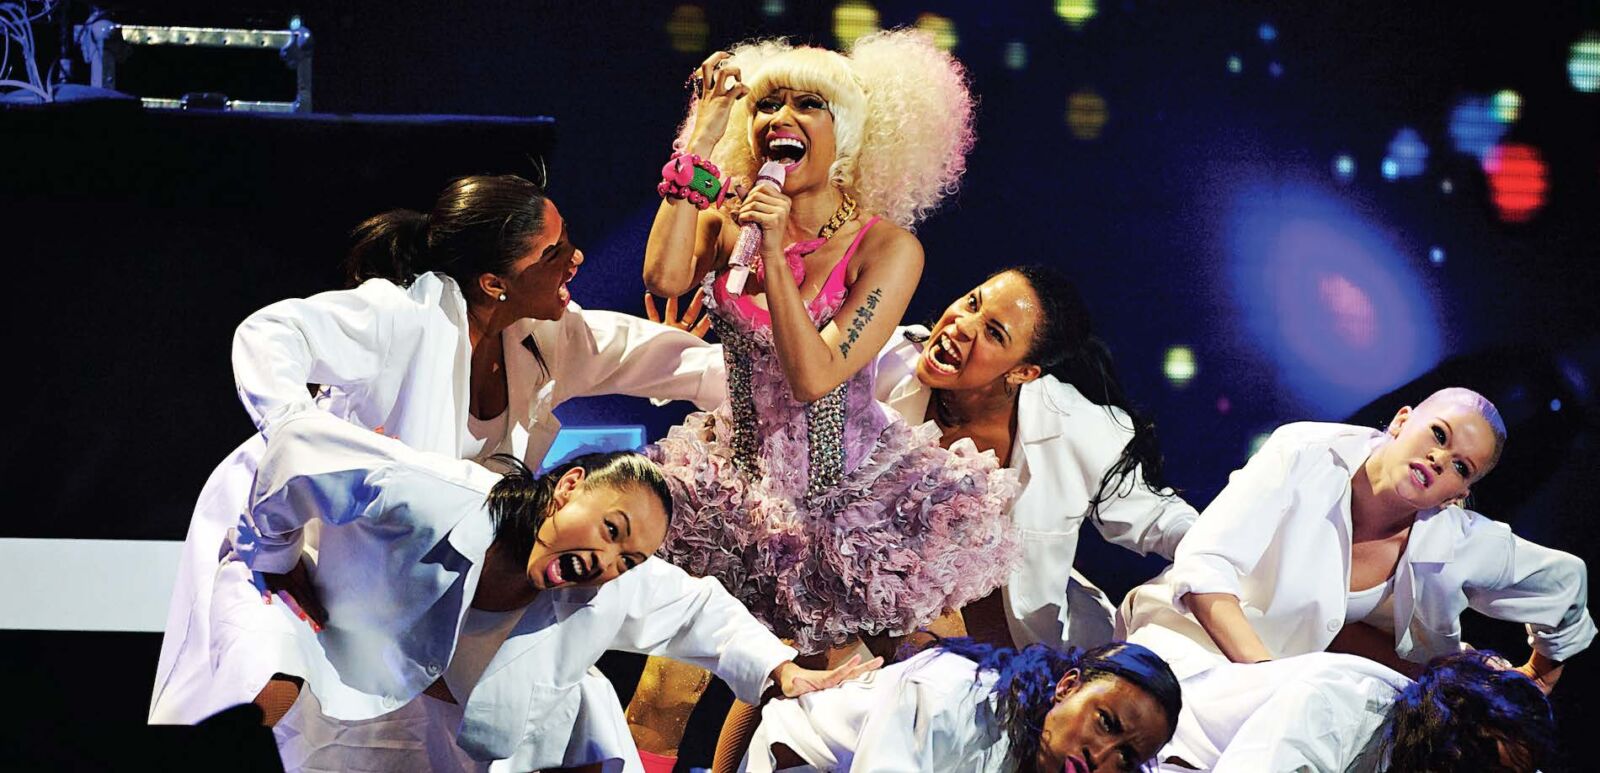 Las Vegas, NV, USA: September 24, 2011 - Nicki Minaj performs at the inaugural iHeartRadio Music Festival at the MGM Grand Garden Arena. Photo via Shutterstock.